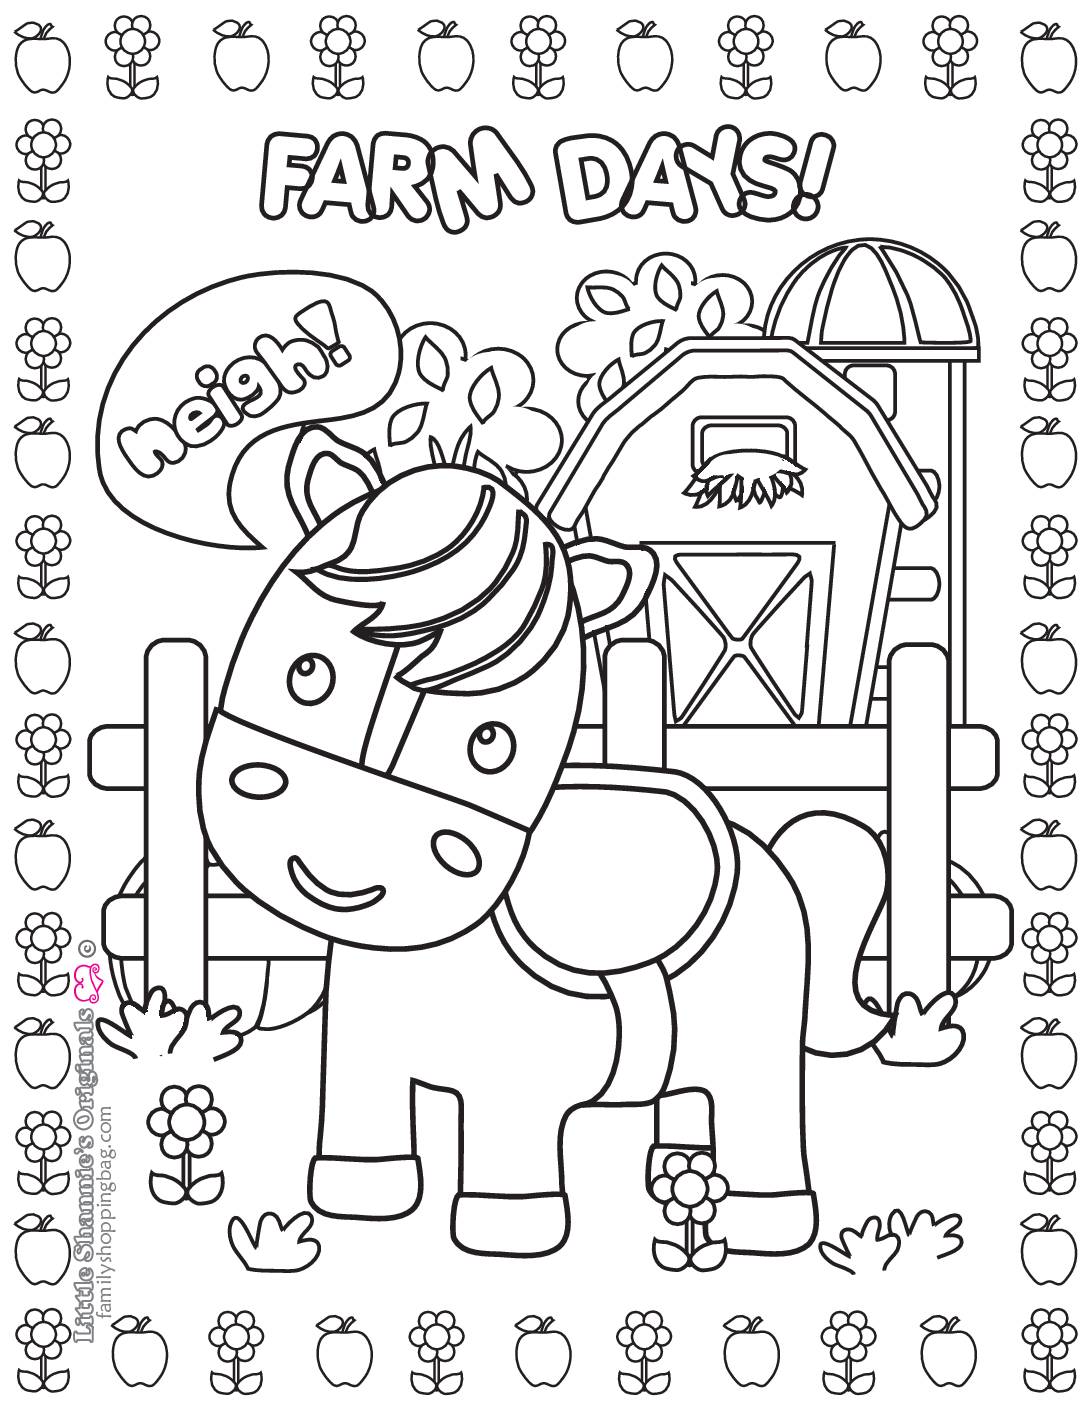 Coloring Page 2 Farm